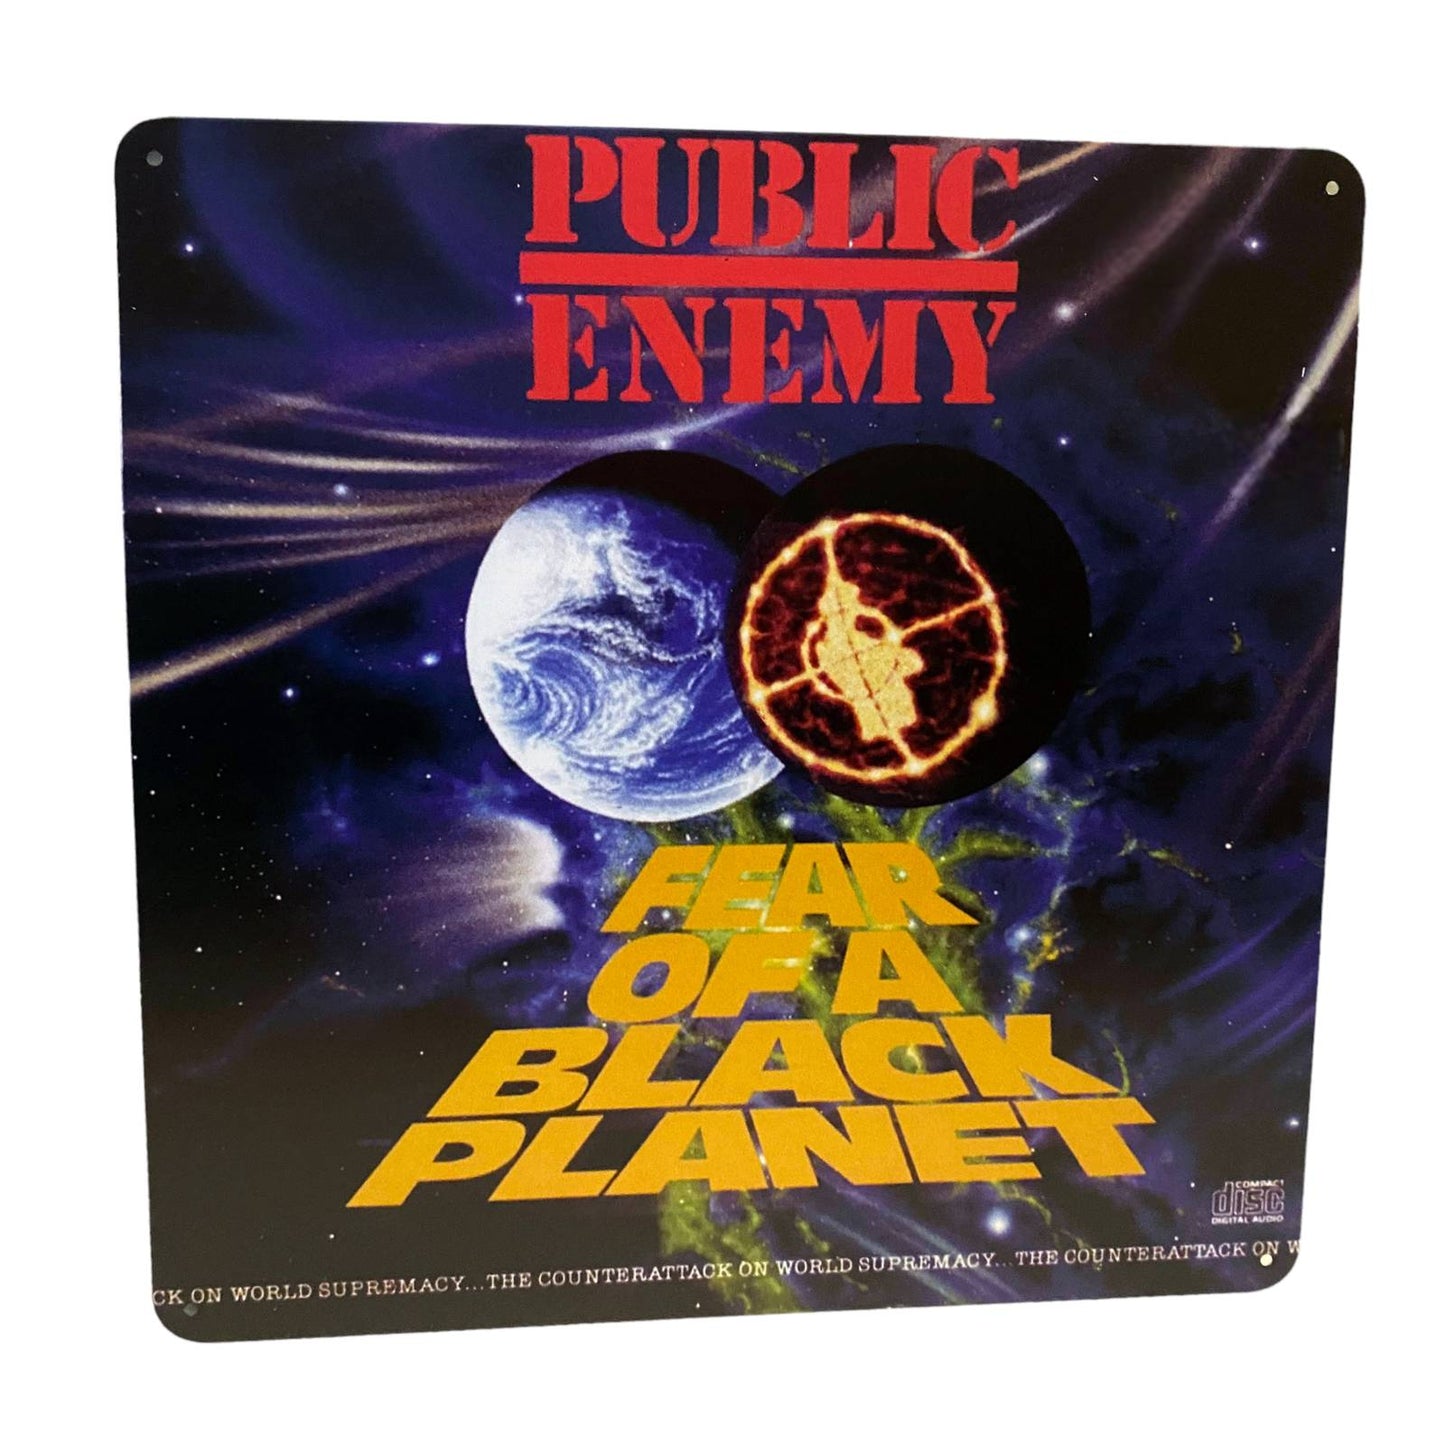 Public Enemy - Fear of a Black Planet Album Cover Metal Print Tin Sign 12"x 12"